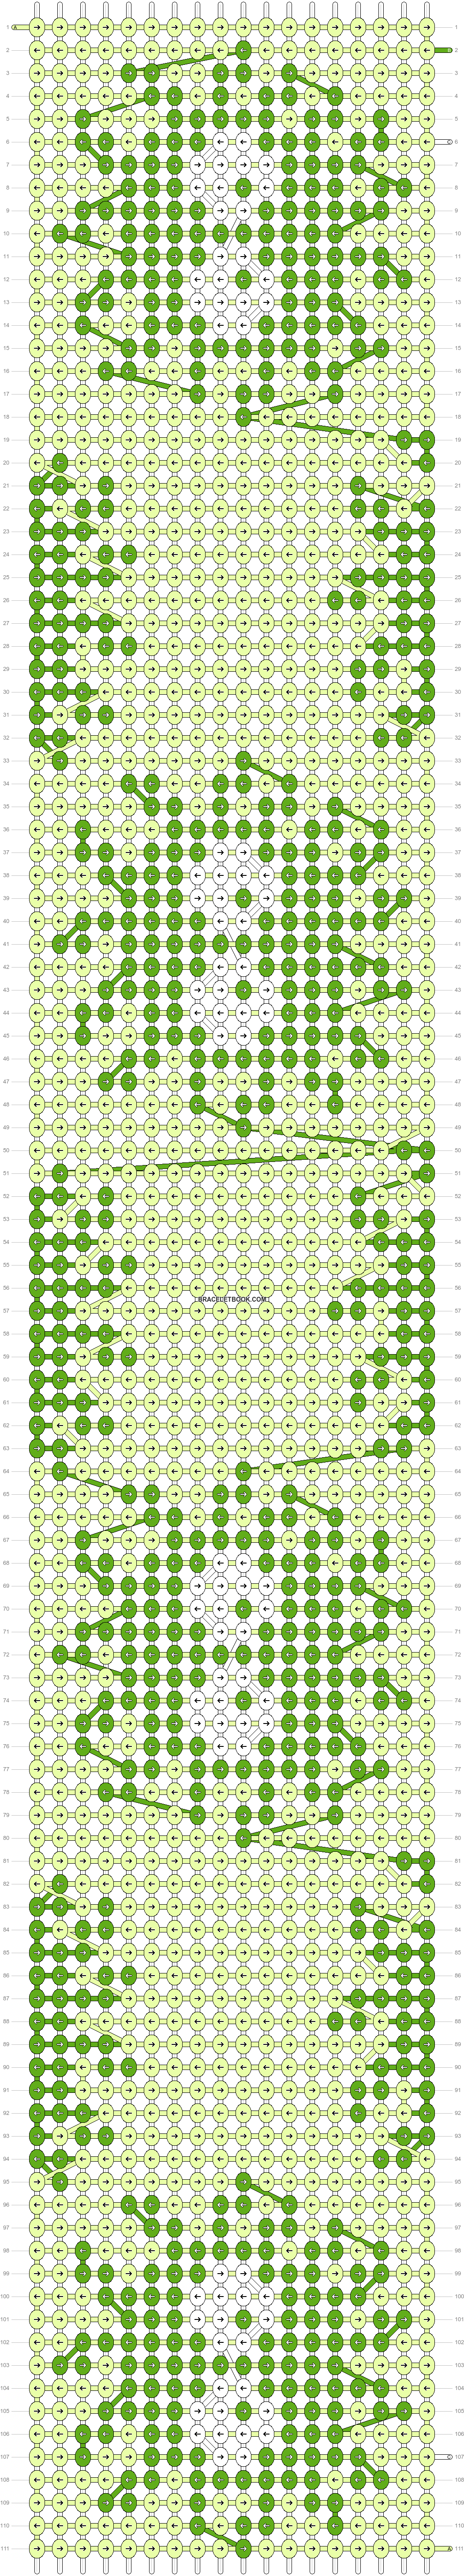 Alpha pattern #39988 variation #58240 pattern